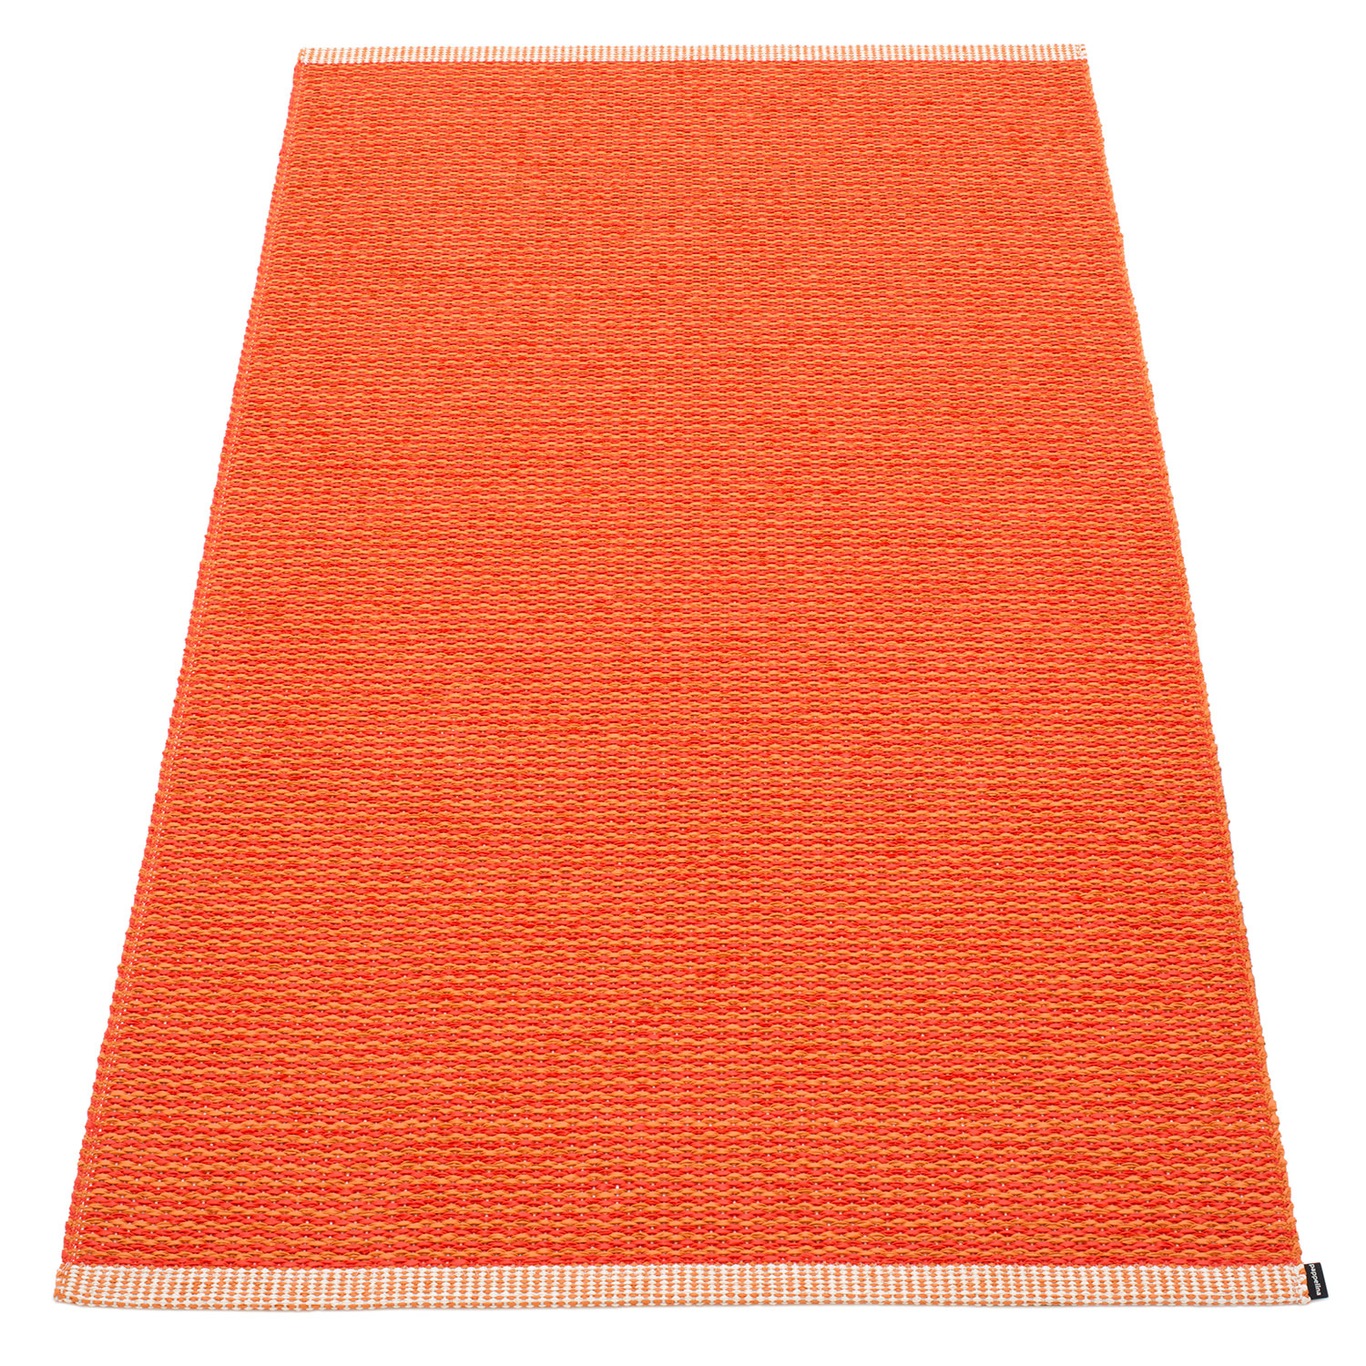 Mono Rug 85x160cm, Pale Orange/Coral Red